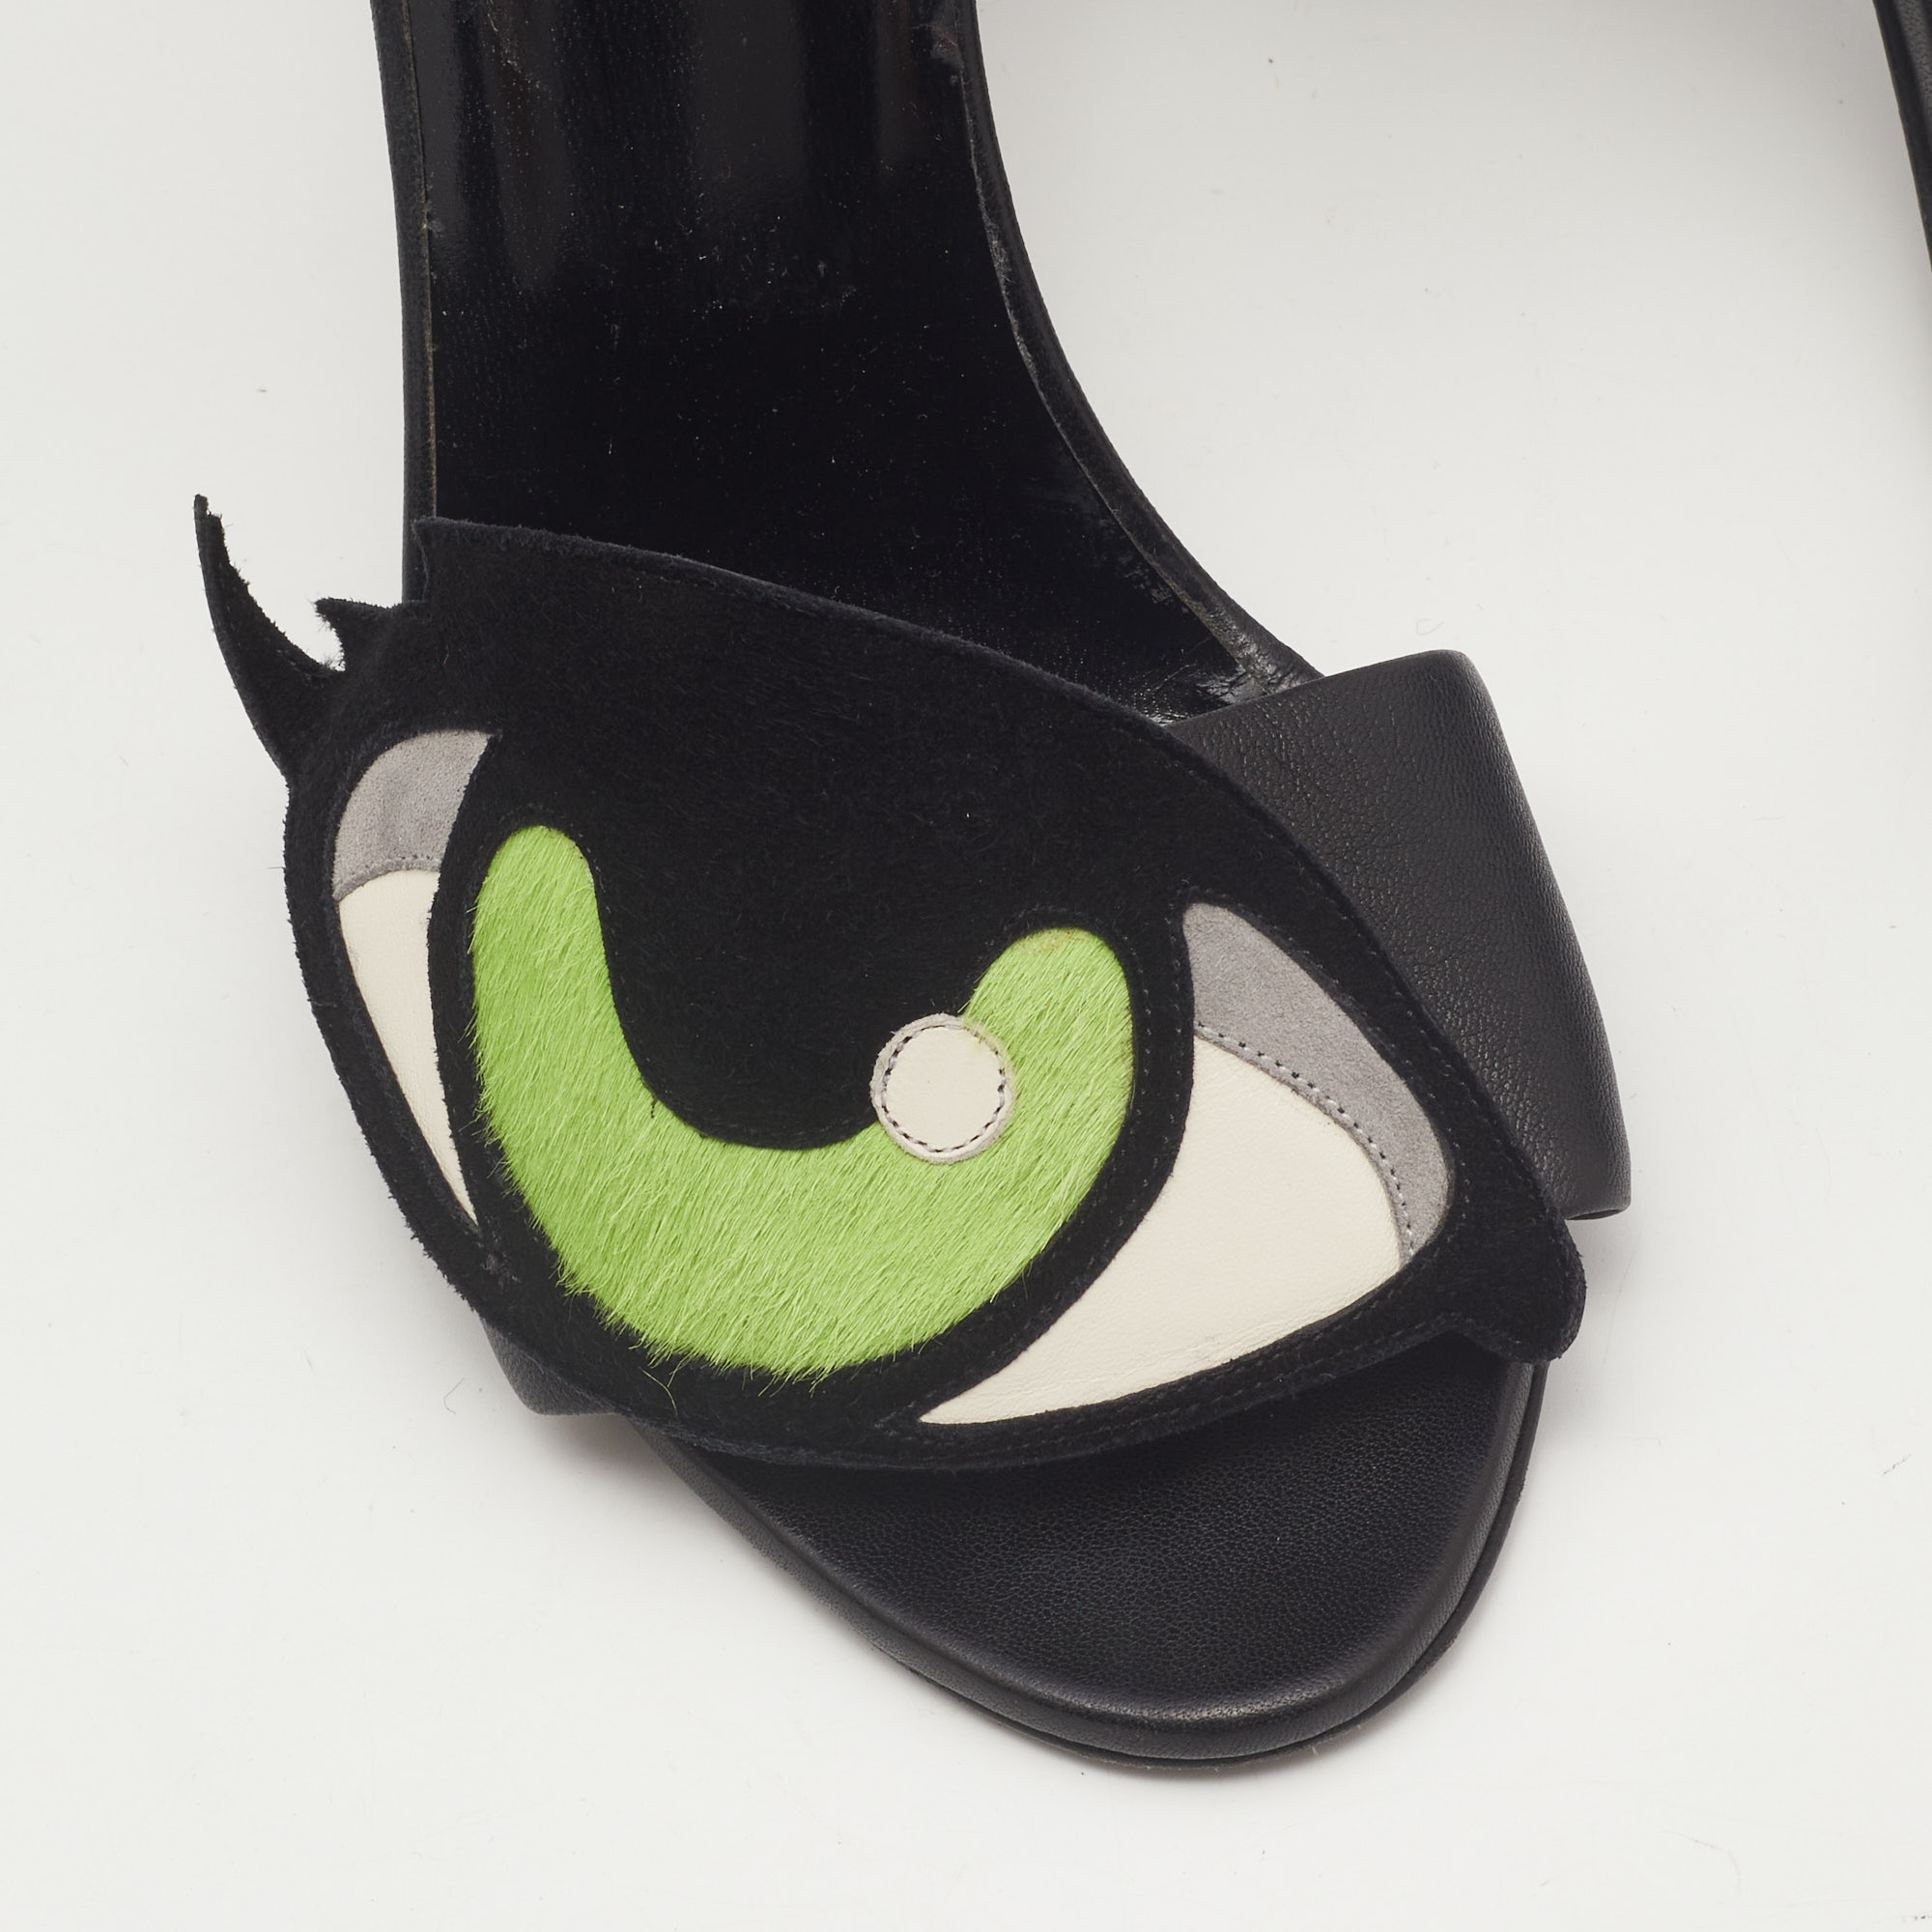 Pierre Hardy Black Leather Eye Detail Ankle Strap Sandals Size 38